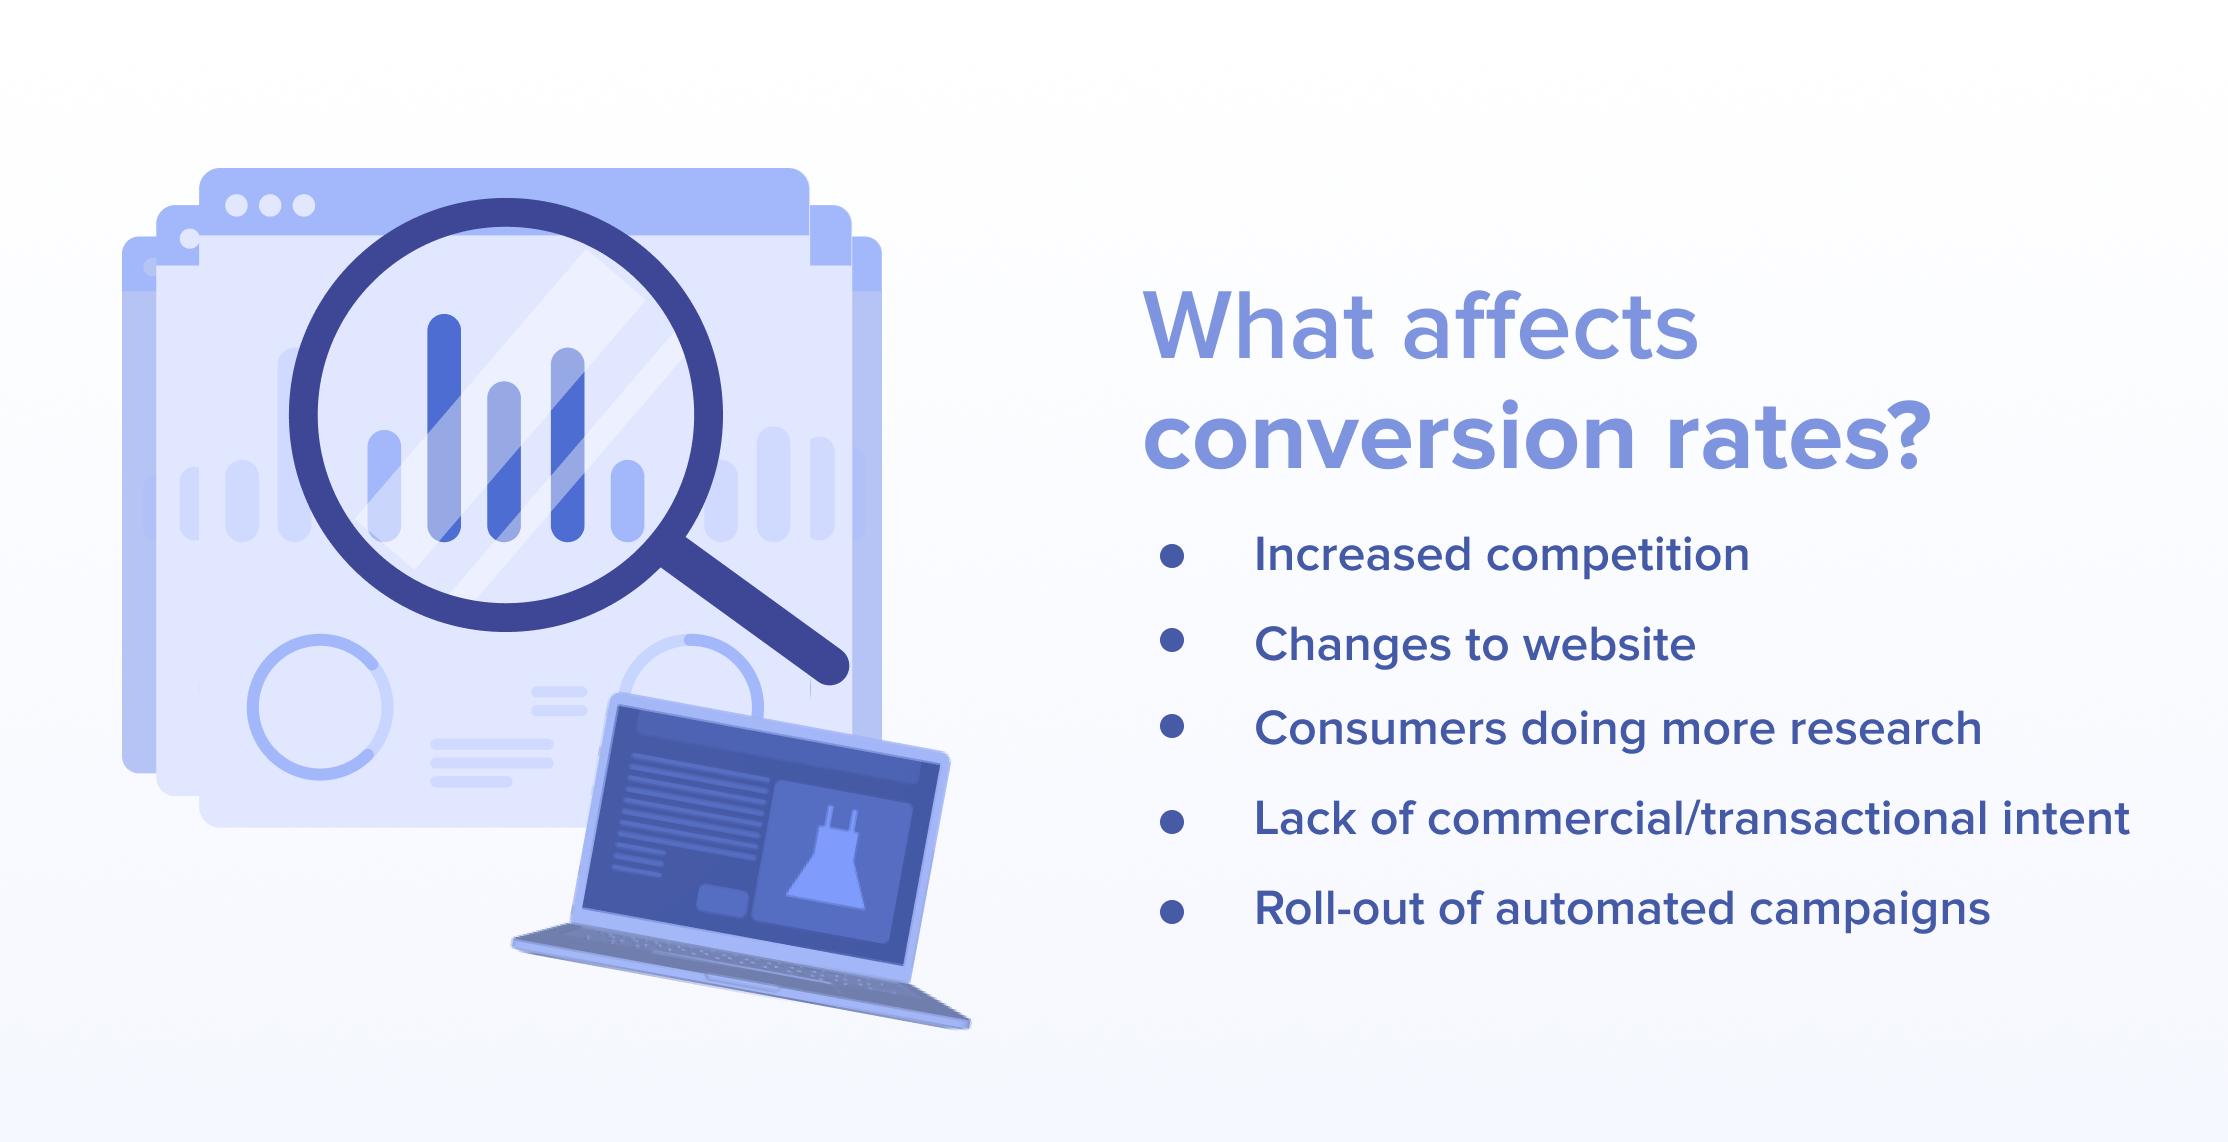 Common factors that affect ad conversion rates